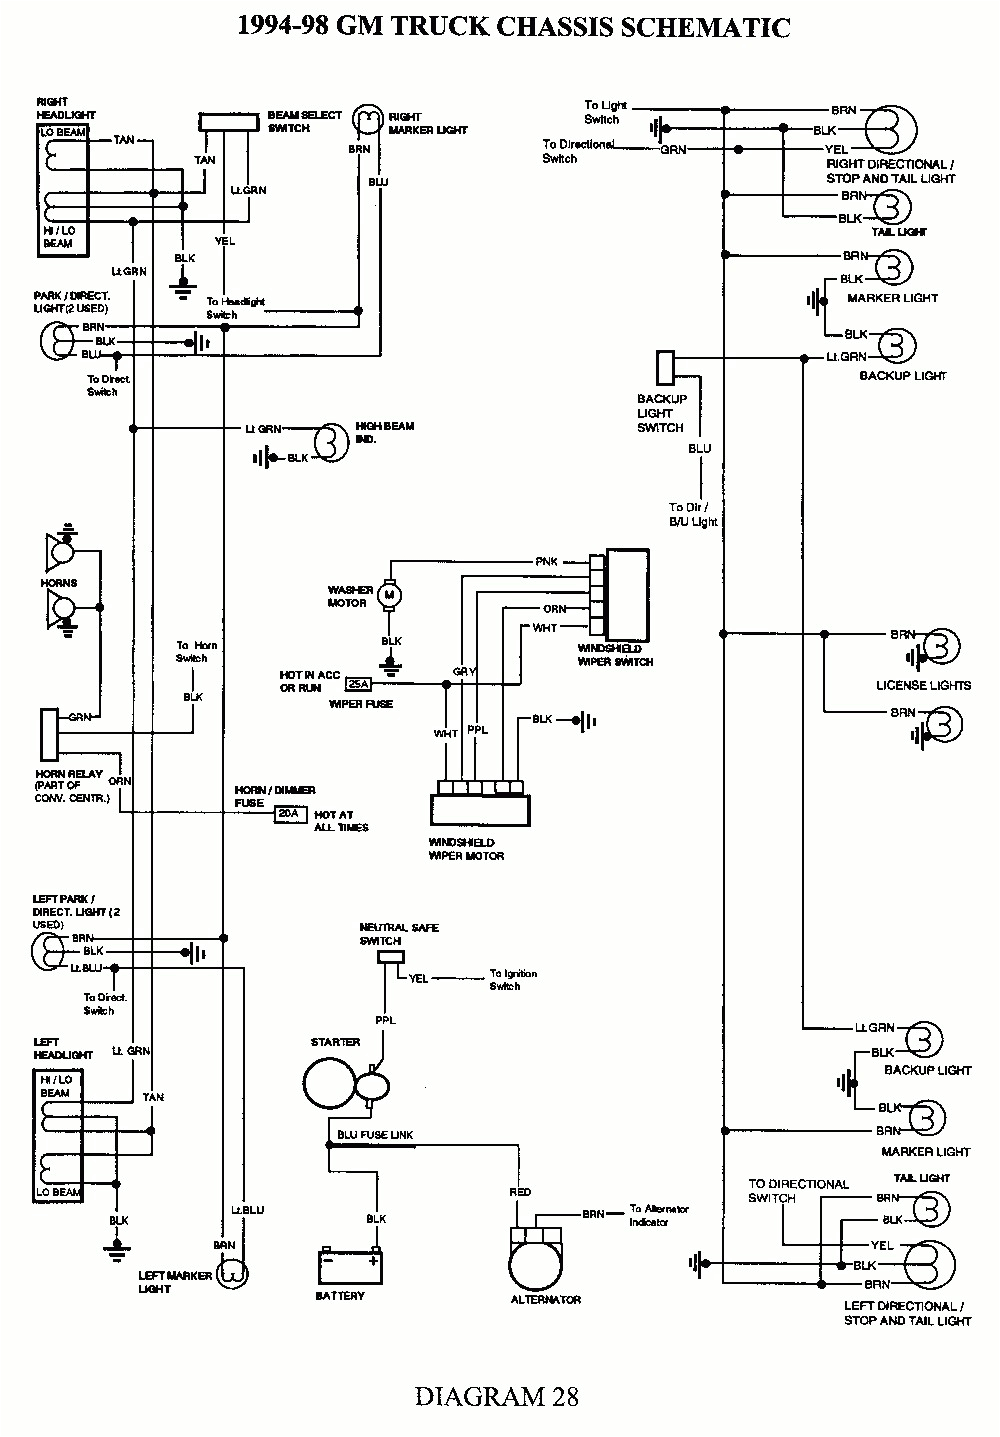 2002 chevrolet silverado wiring diagram wiring diagram sheet 2002 chevy silverado wiring diagram color code 2002